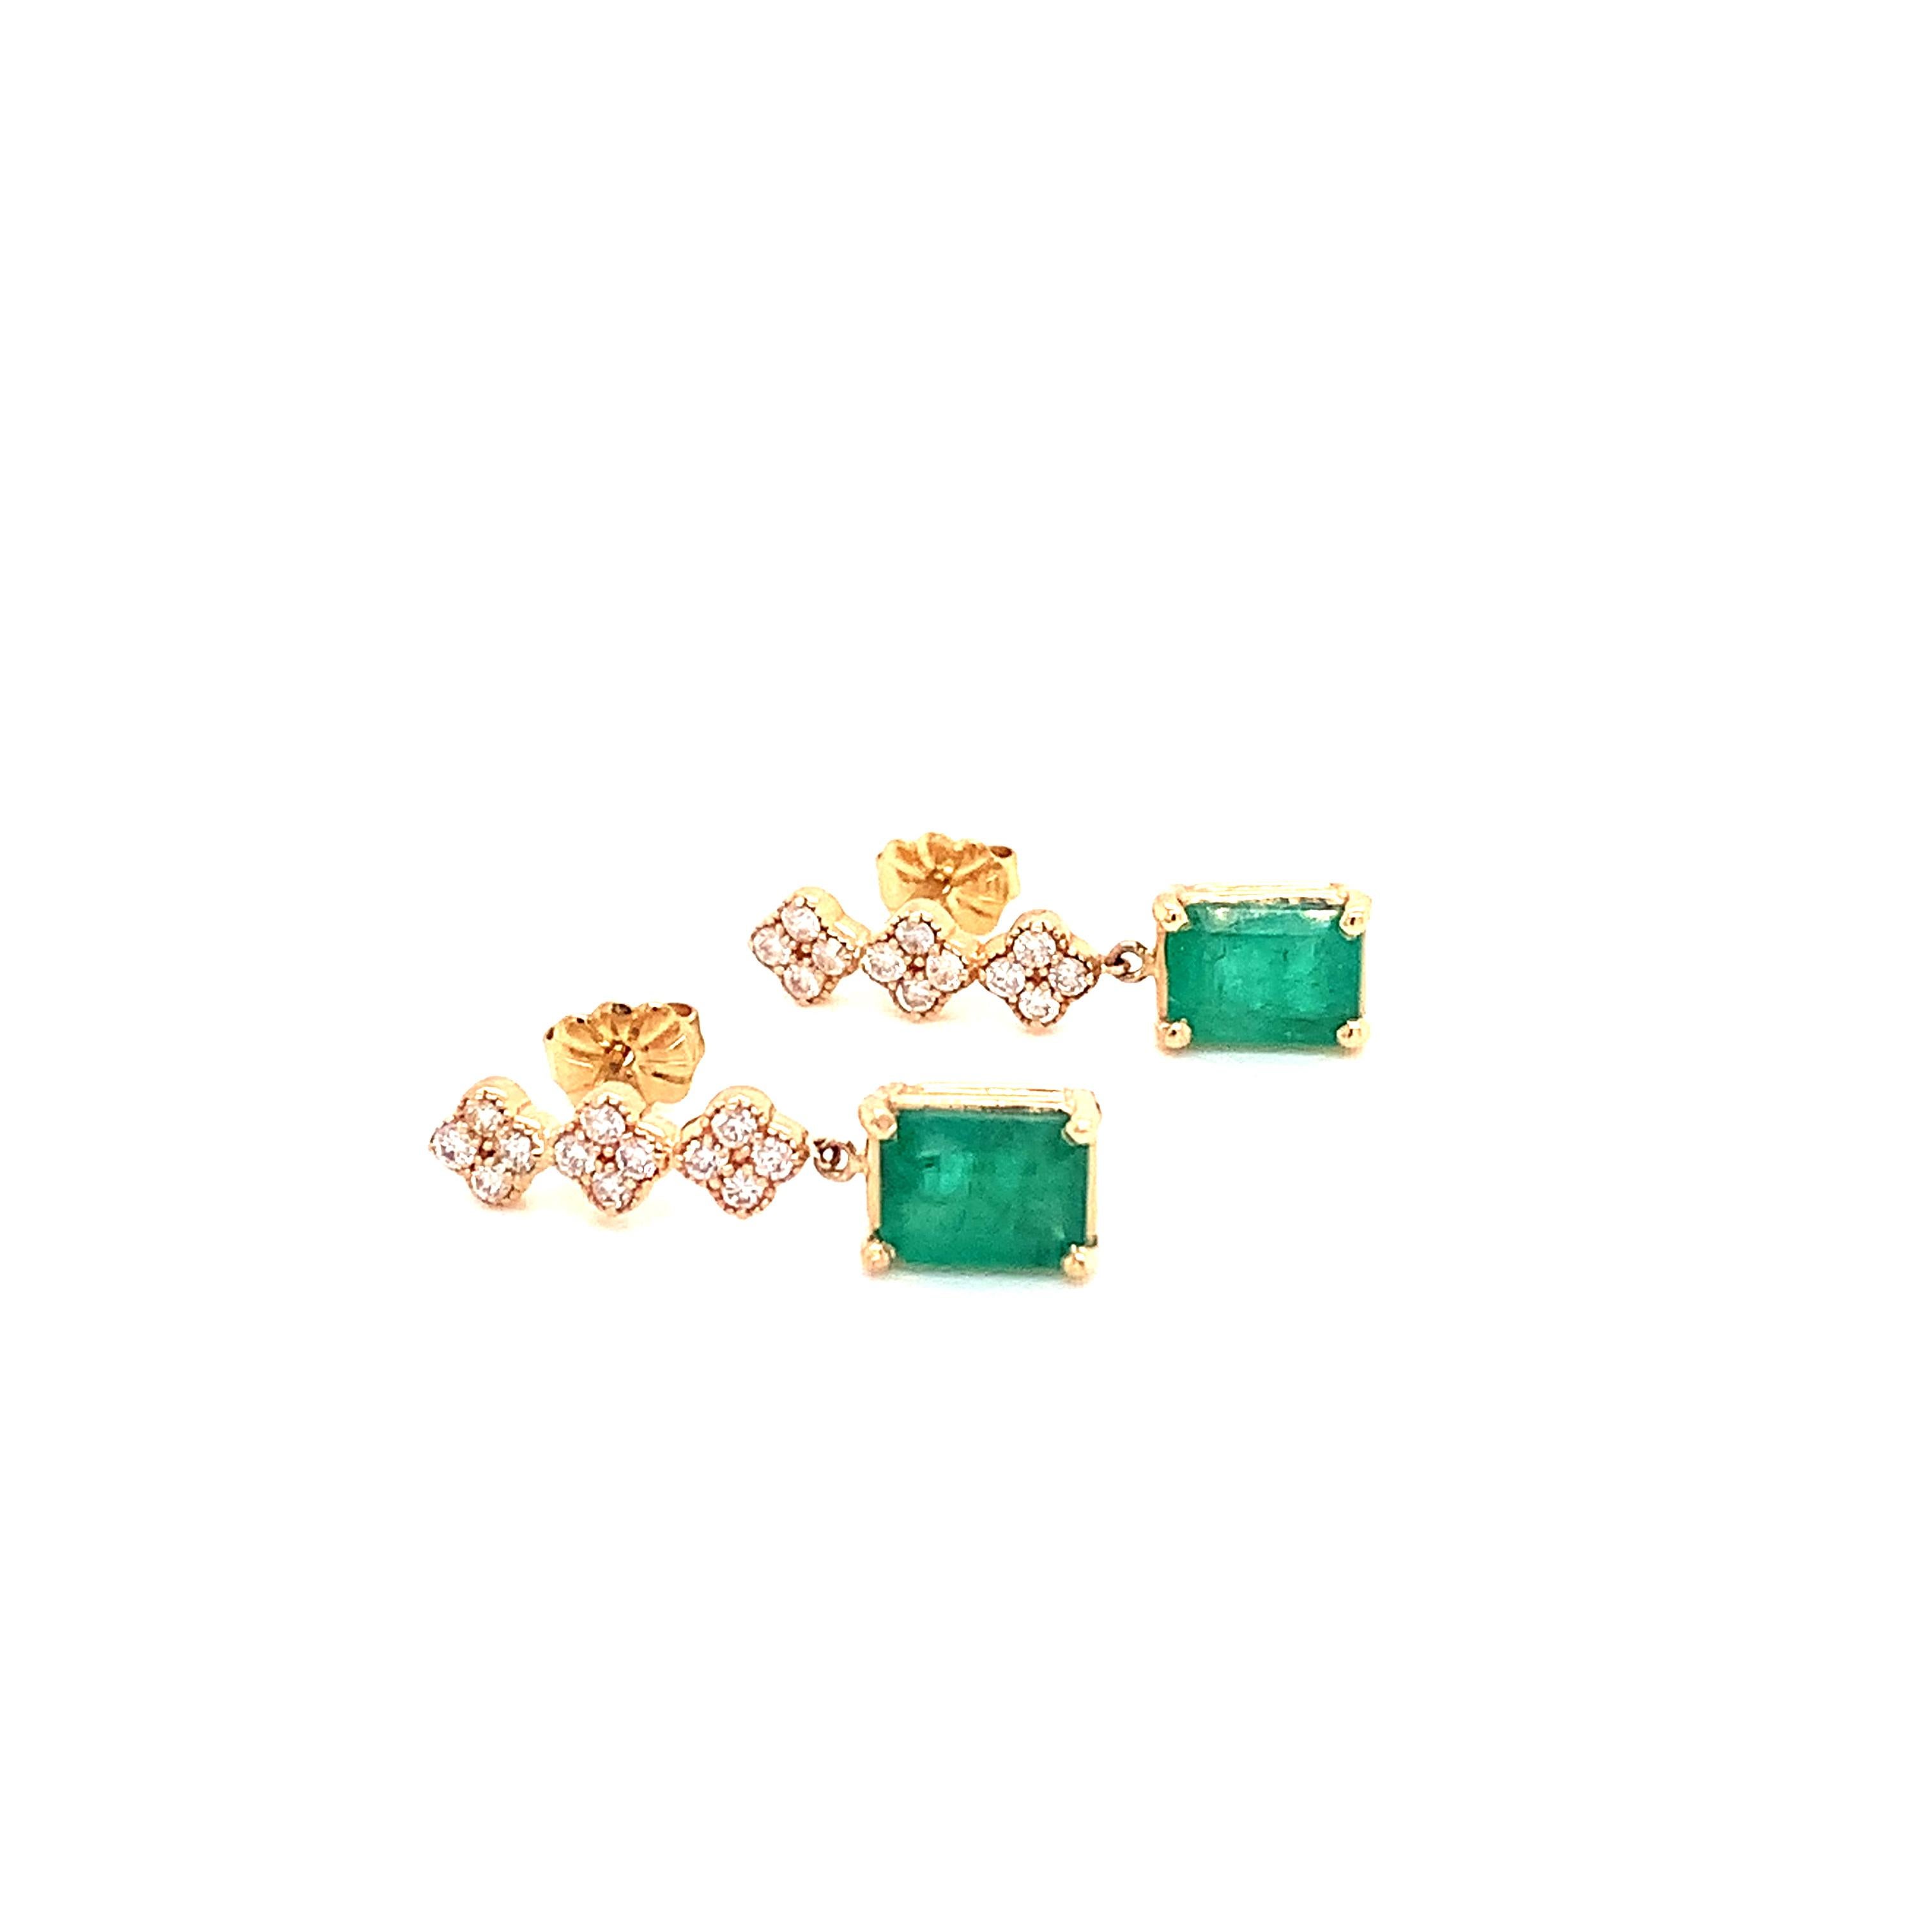 Natural Emerald Diamond Earrings 14k Gold 3.25 TCW Certified 4